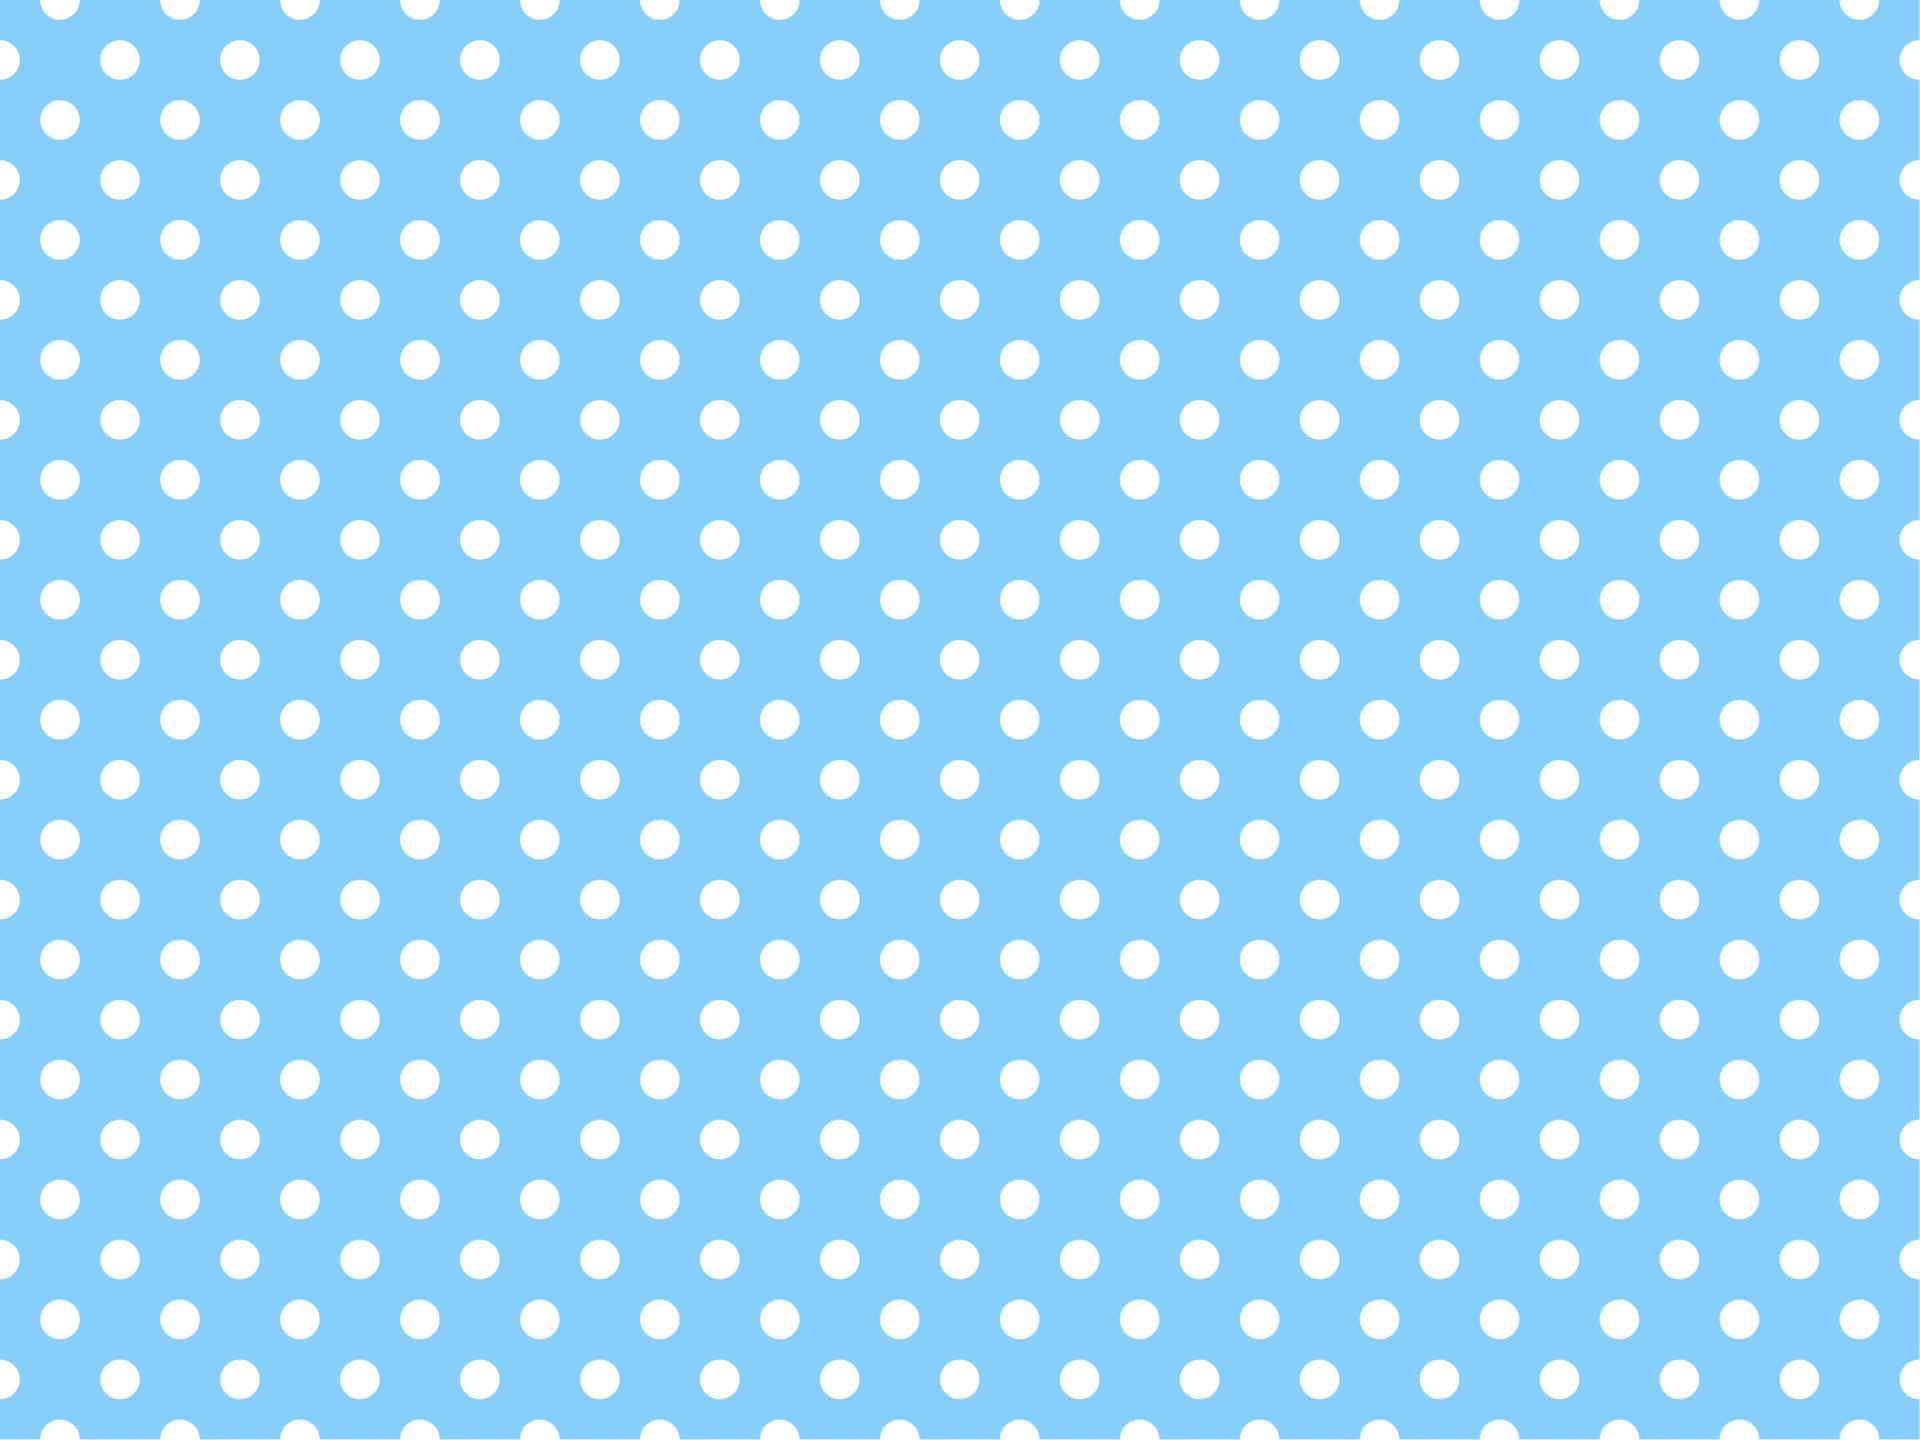 10. Blue and White Polka Dot Nail Art - wide 1